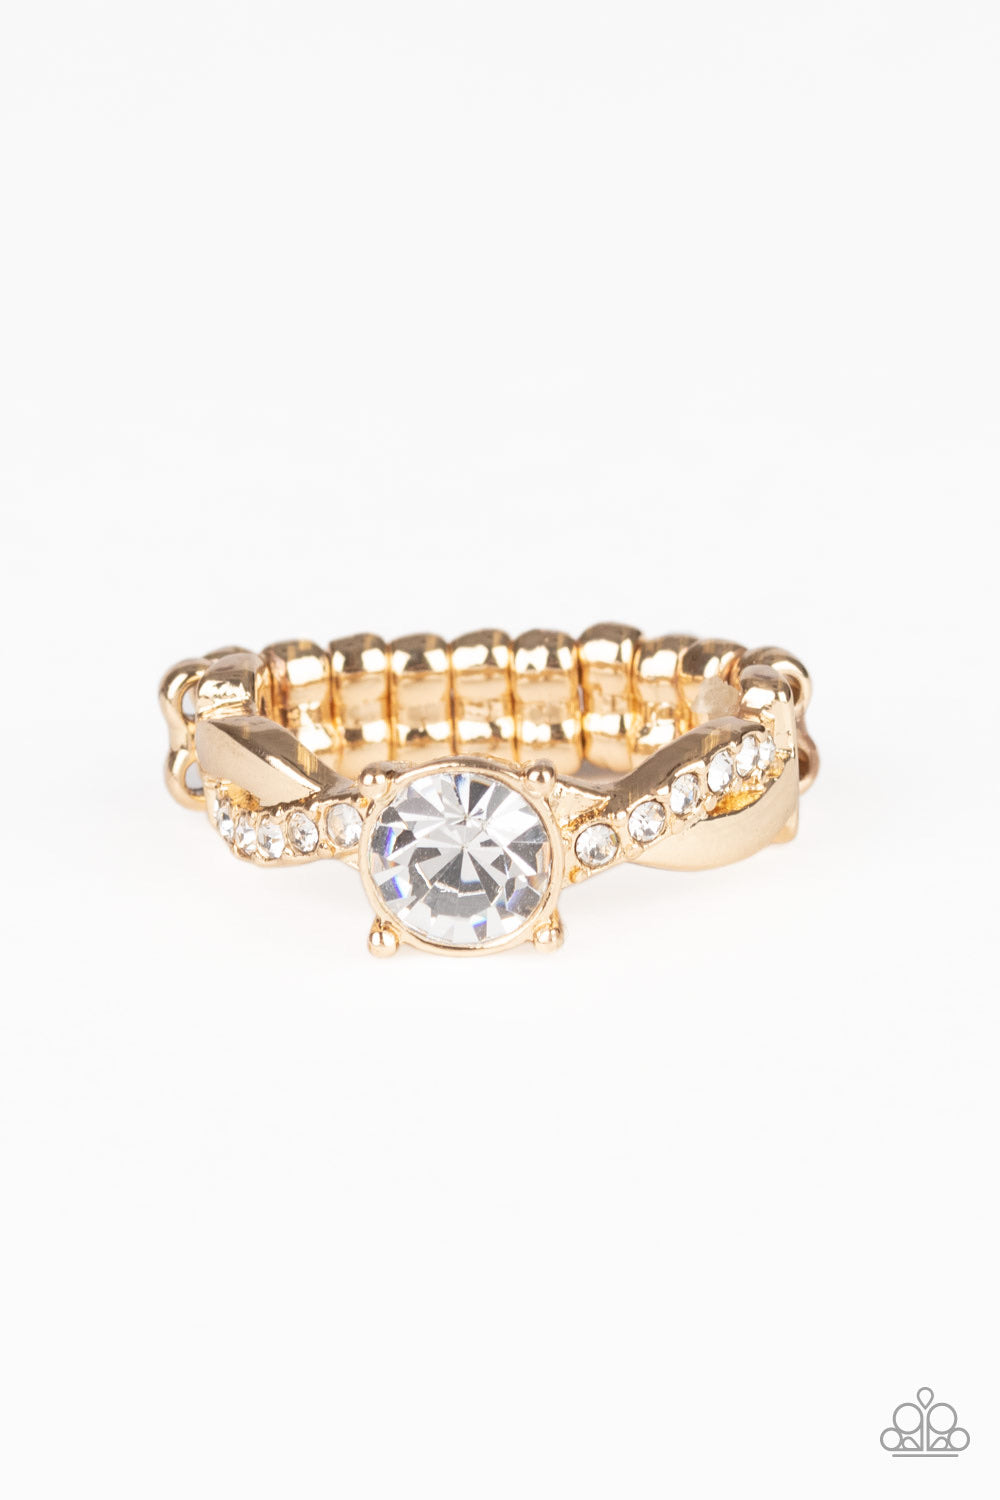 Prim and Proper -Gold - Classy Elite Jewelry